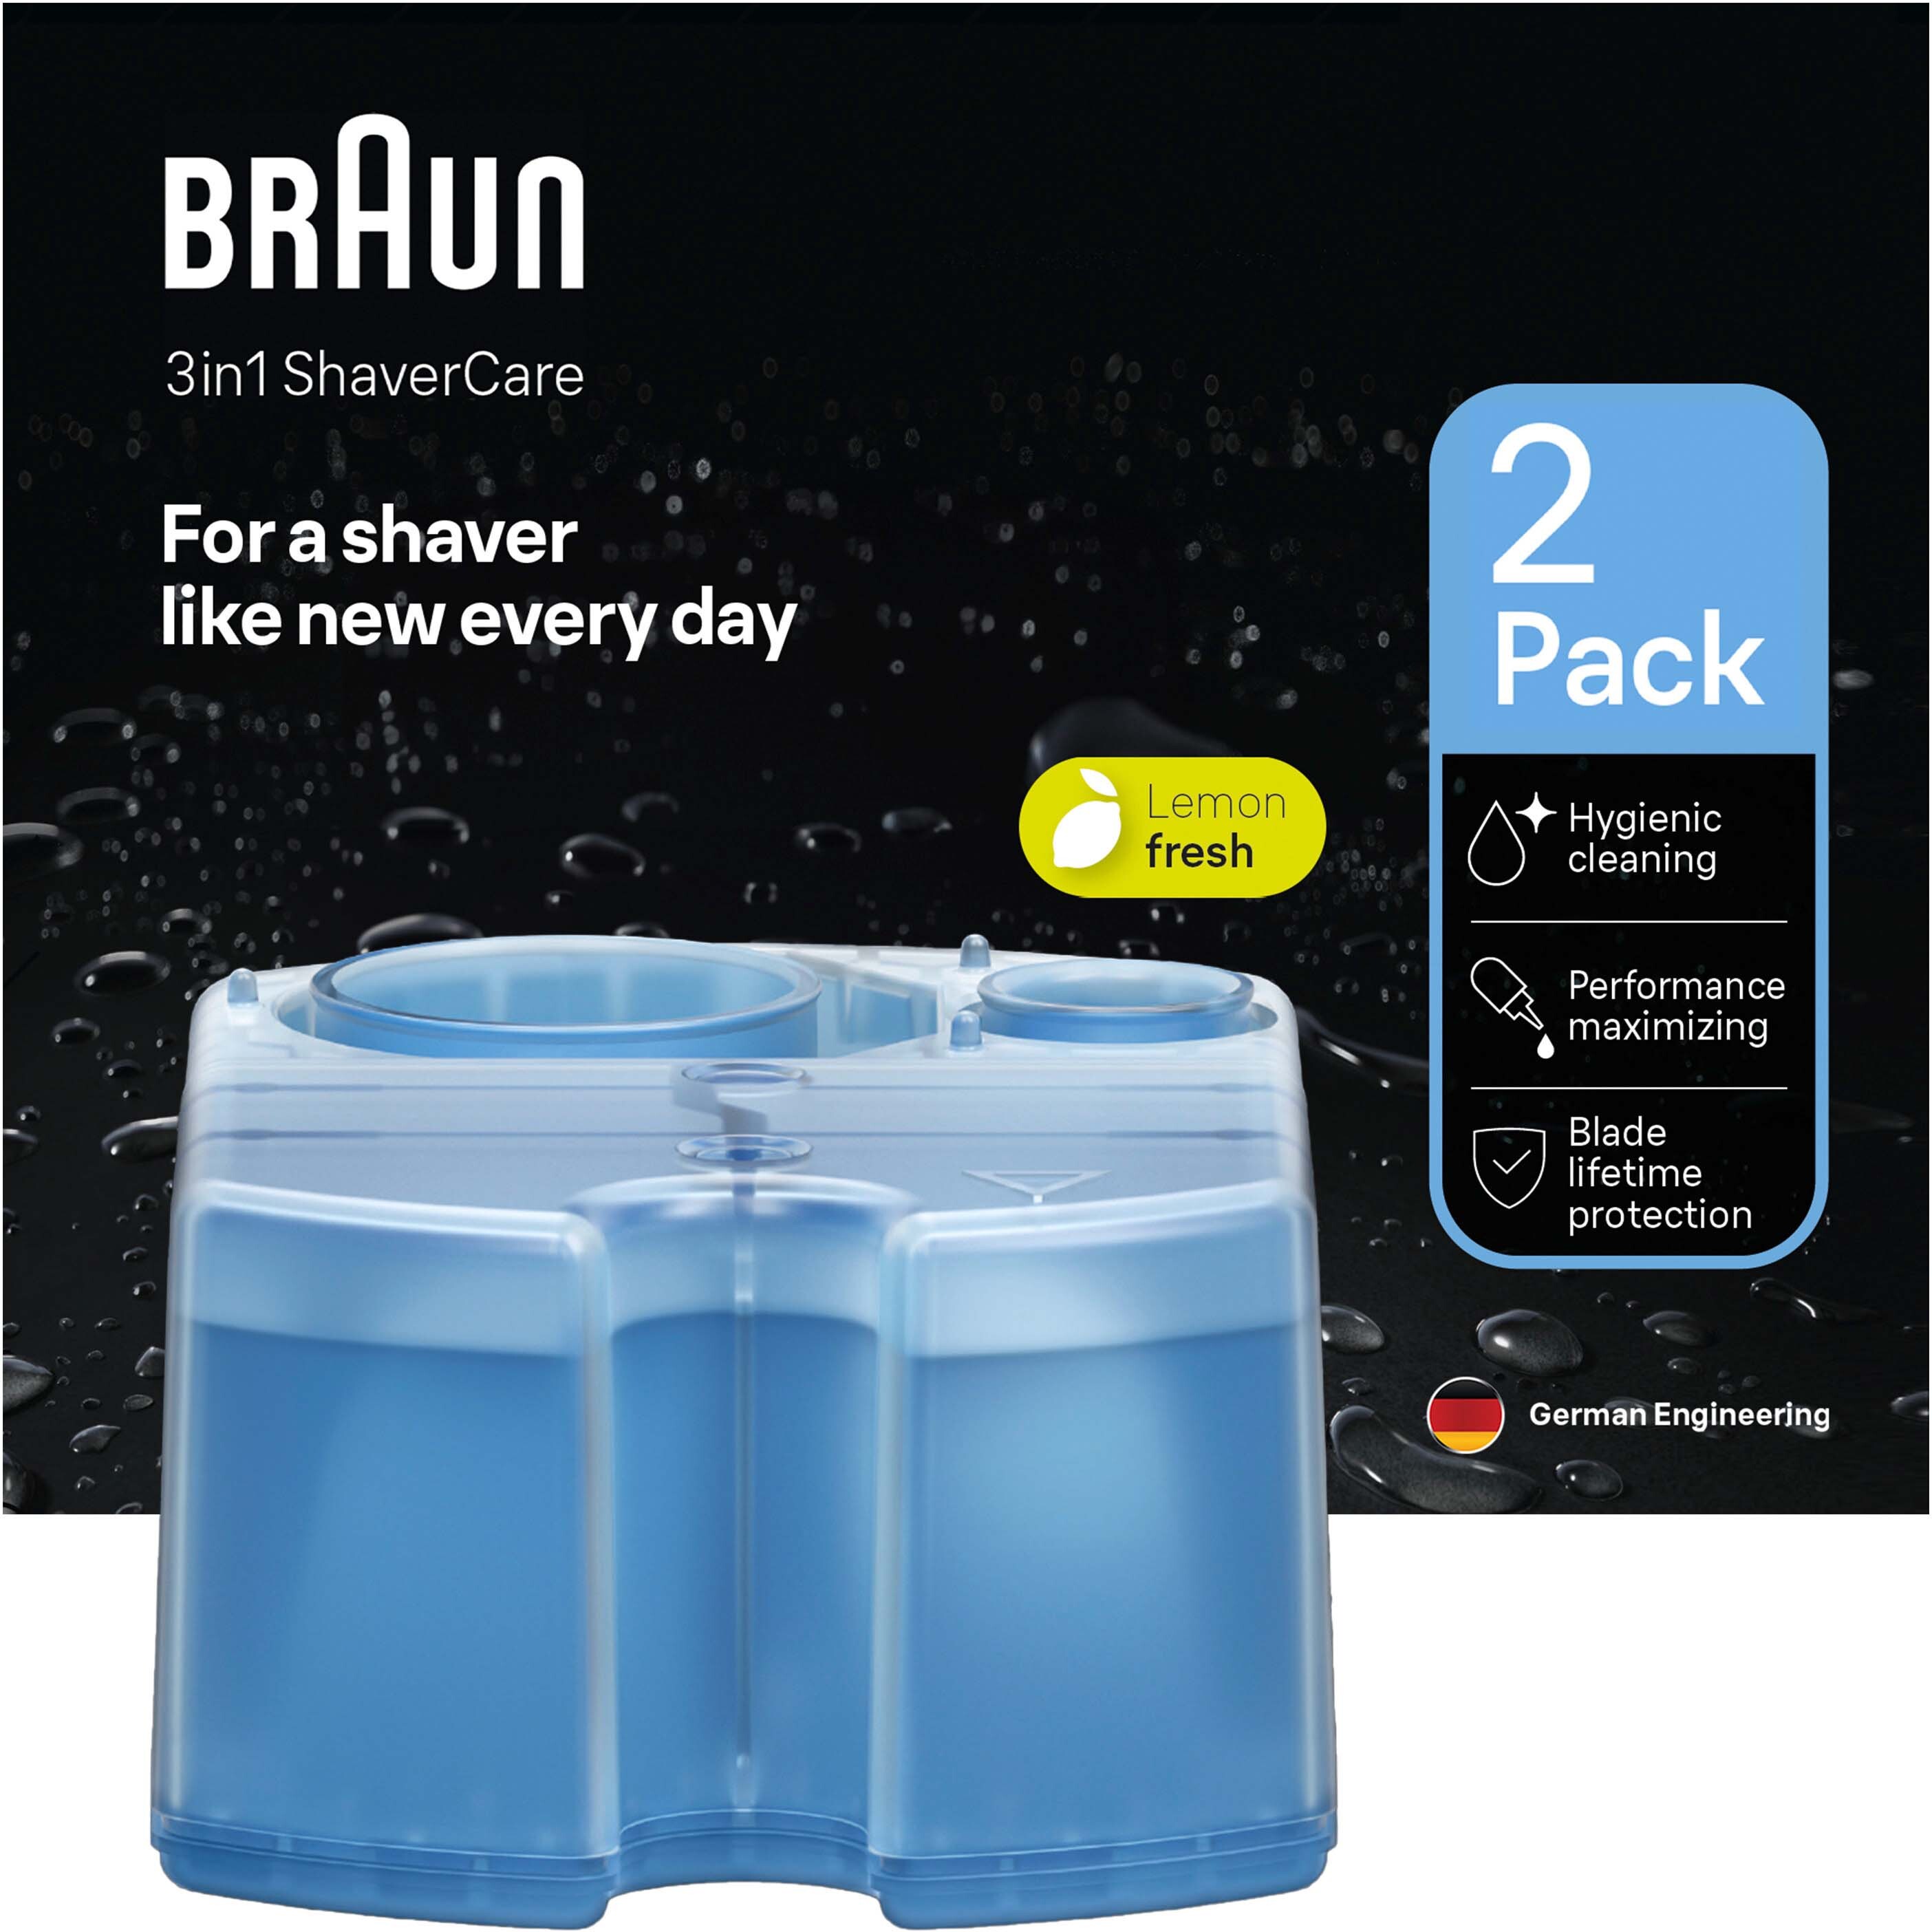 Braun 3in1 ShaverCare SmartCare Center Refill Cartridges Hygienic